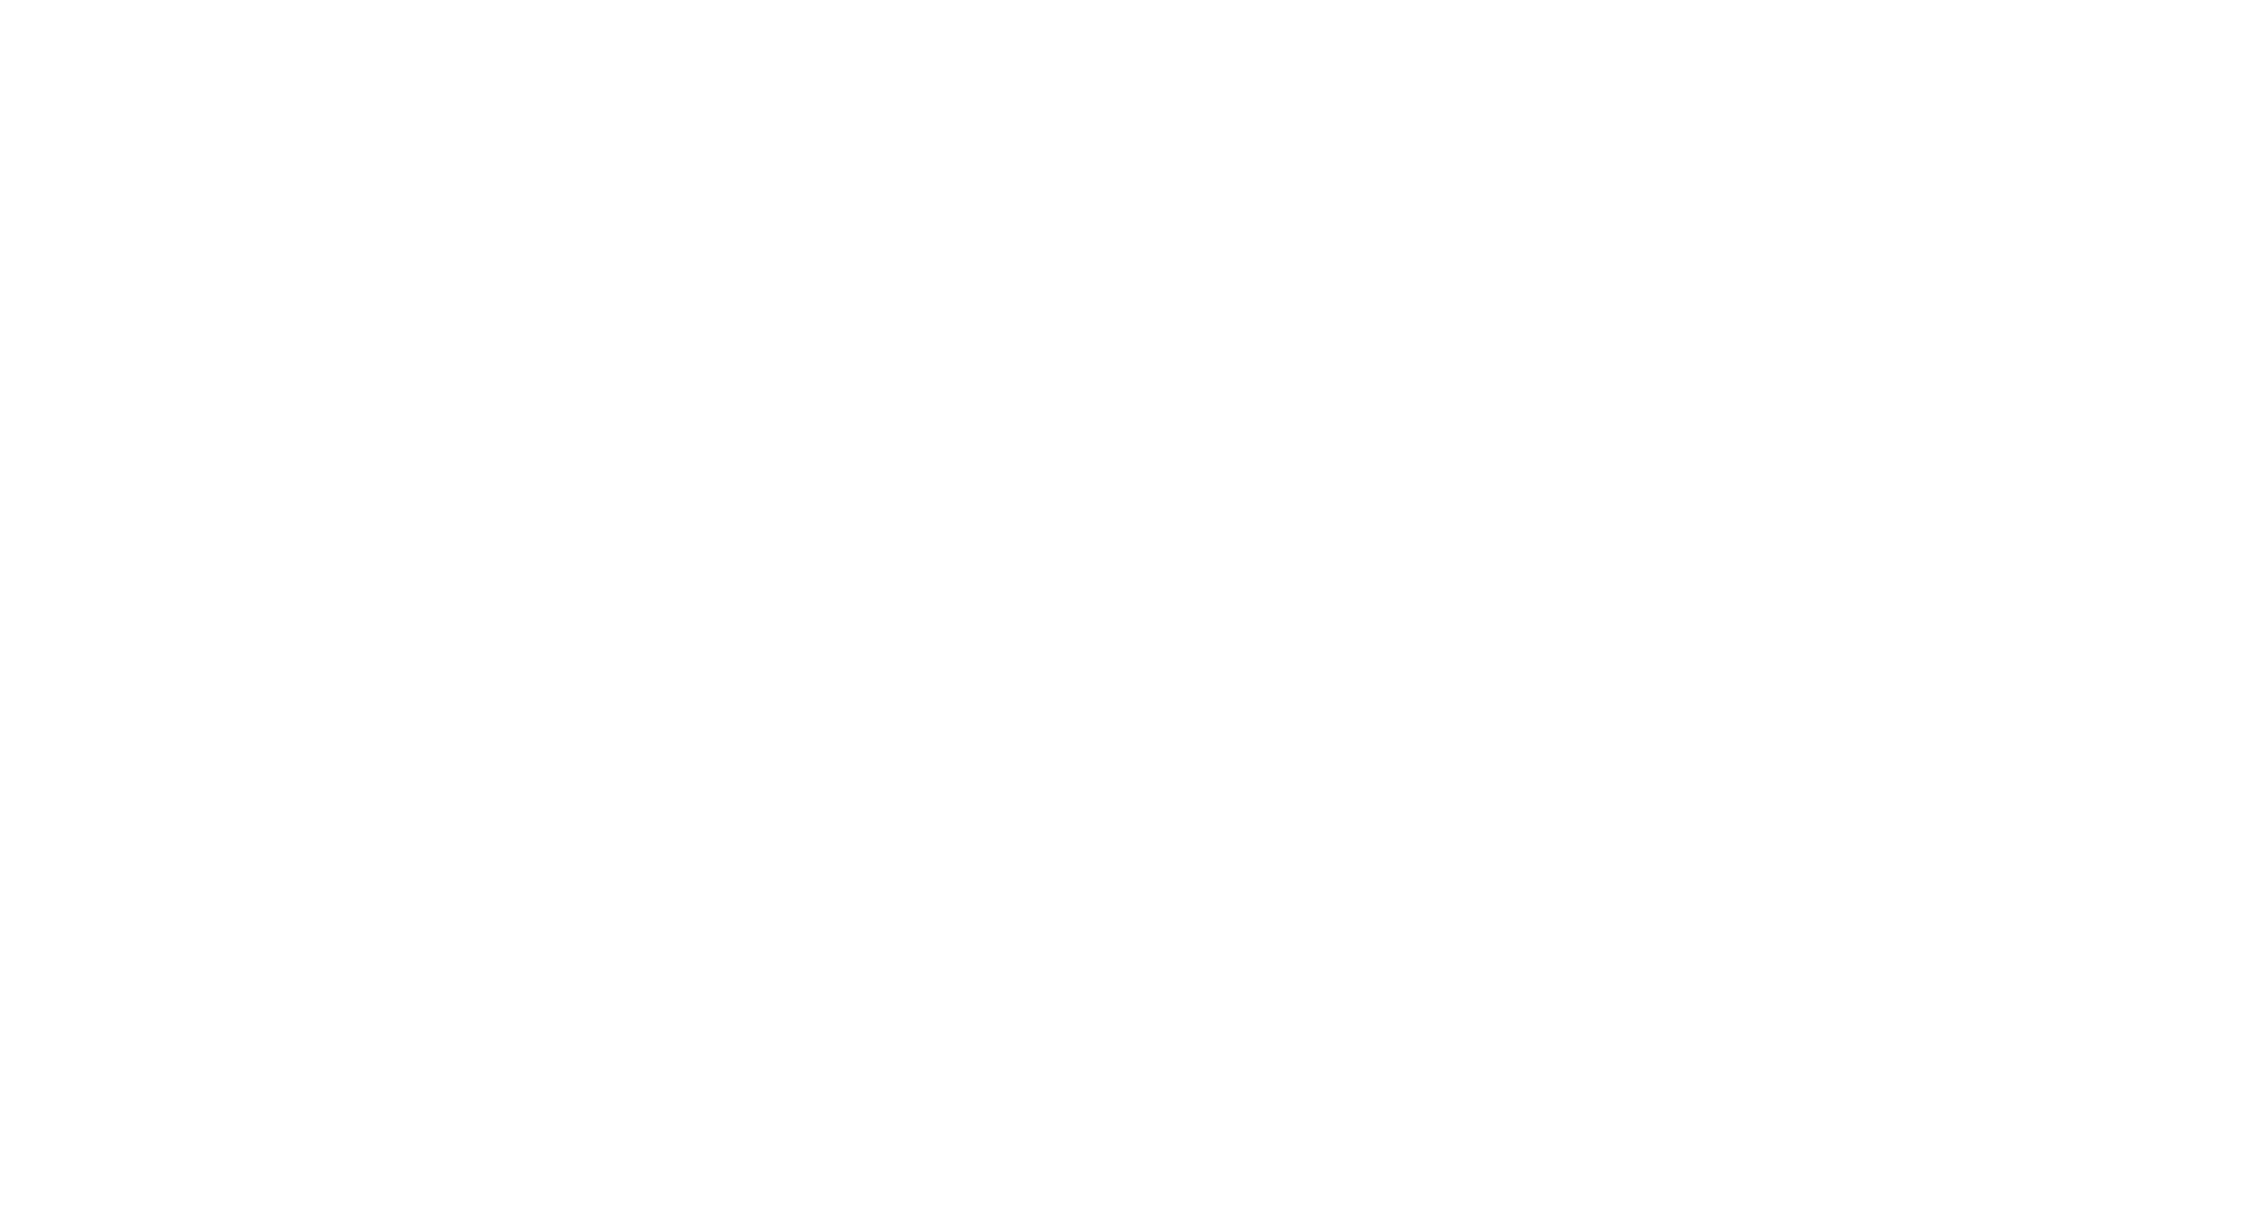 xtend shared branch